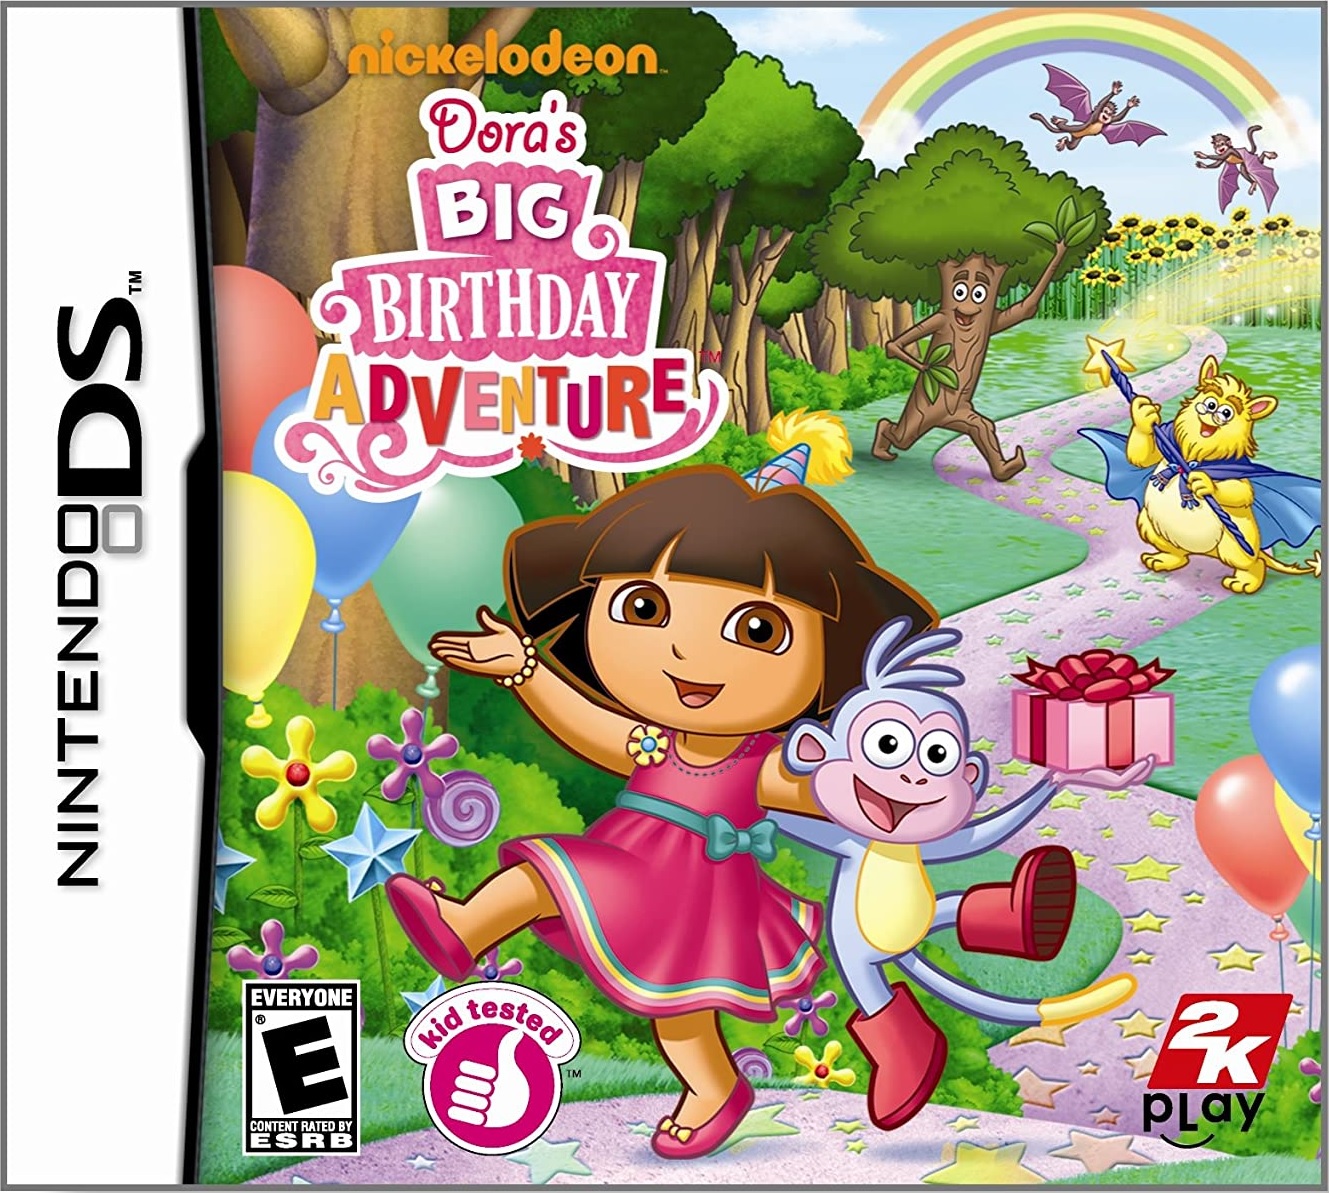 Doras world adventure. Dora's big Birthday Adventure. Dora the Explorer World Adventure. Dora the Explorer: Dora's big Birthday Adventure NDS.